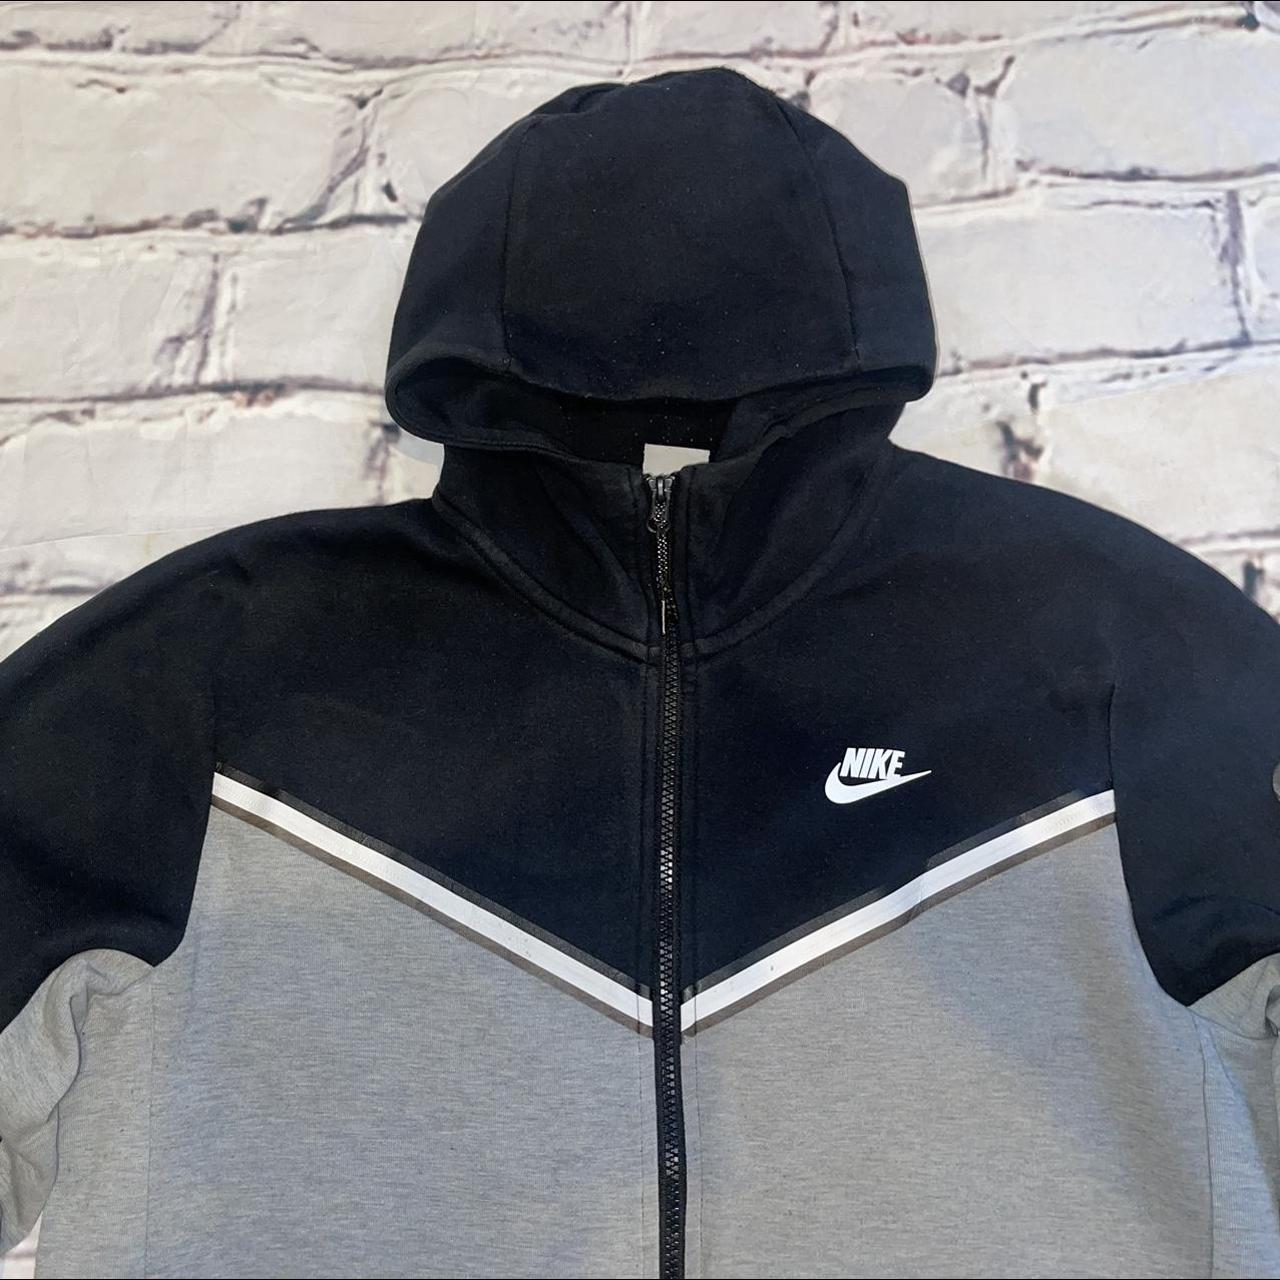 Nike Men's Black and Grey Jacket | Depop